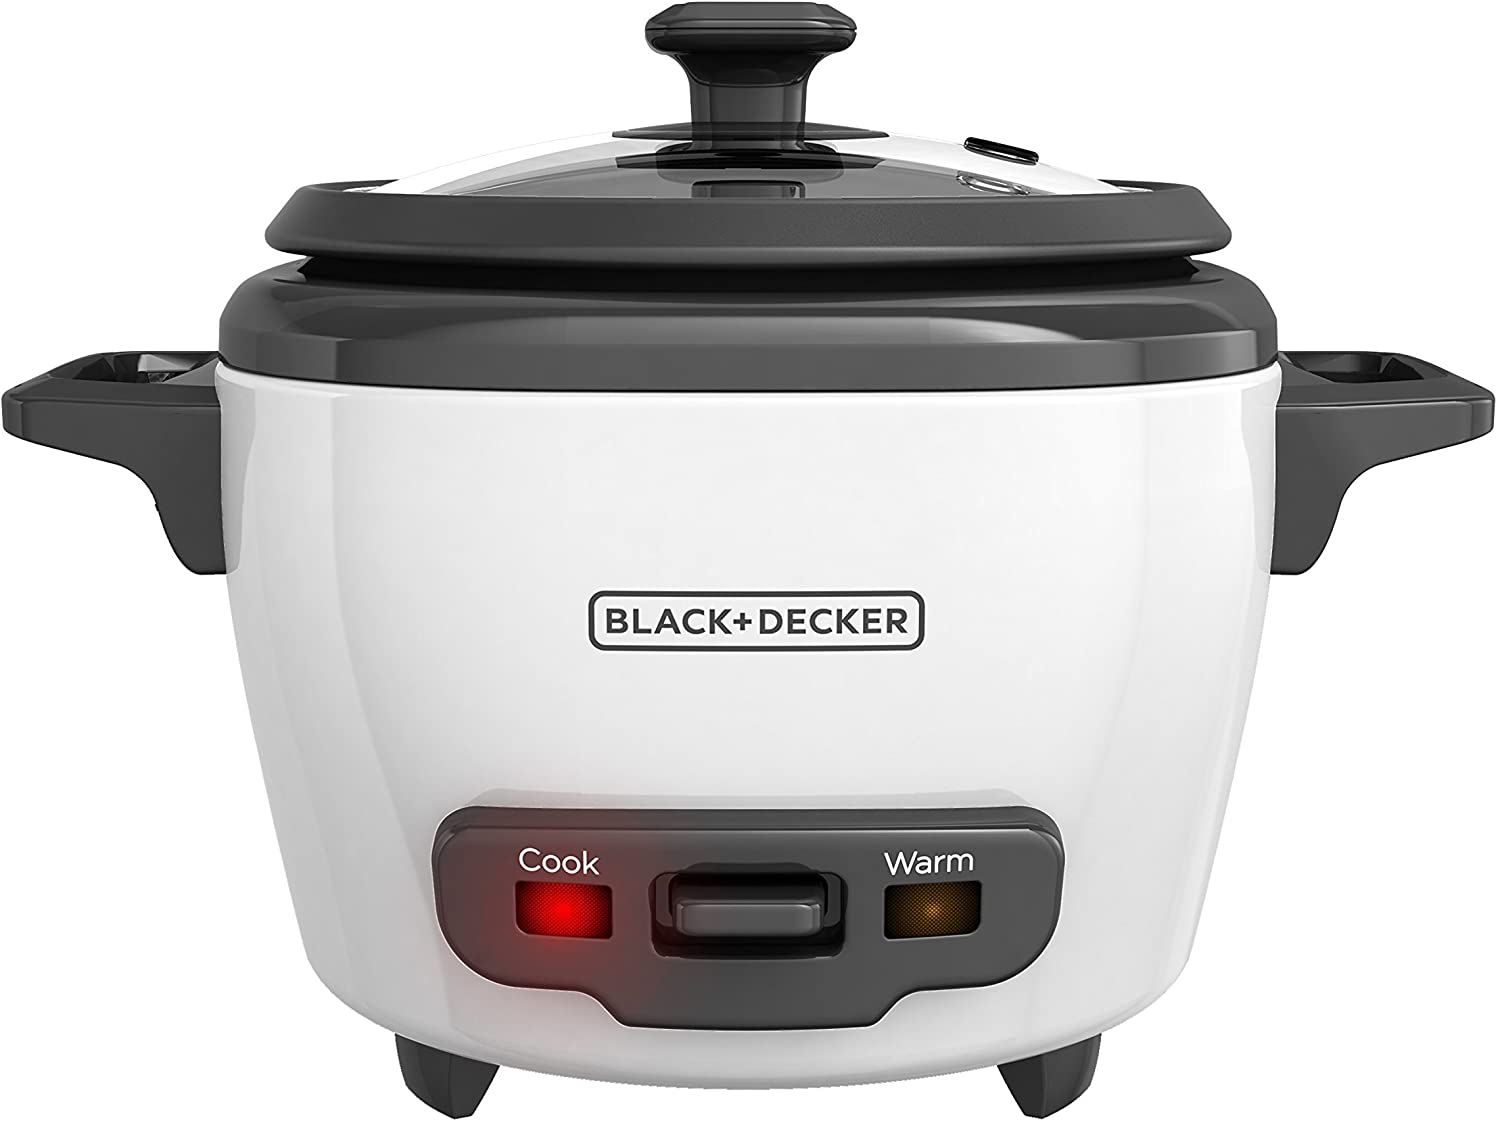 Black+decker rice cooker